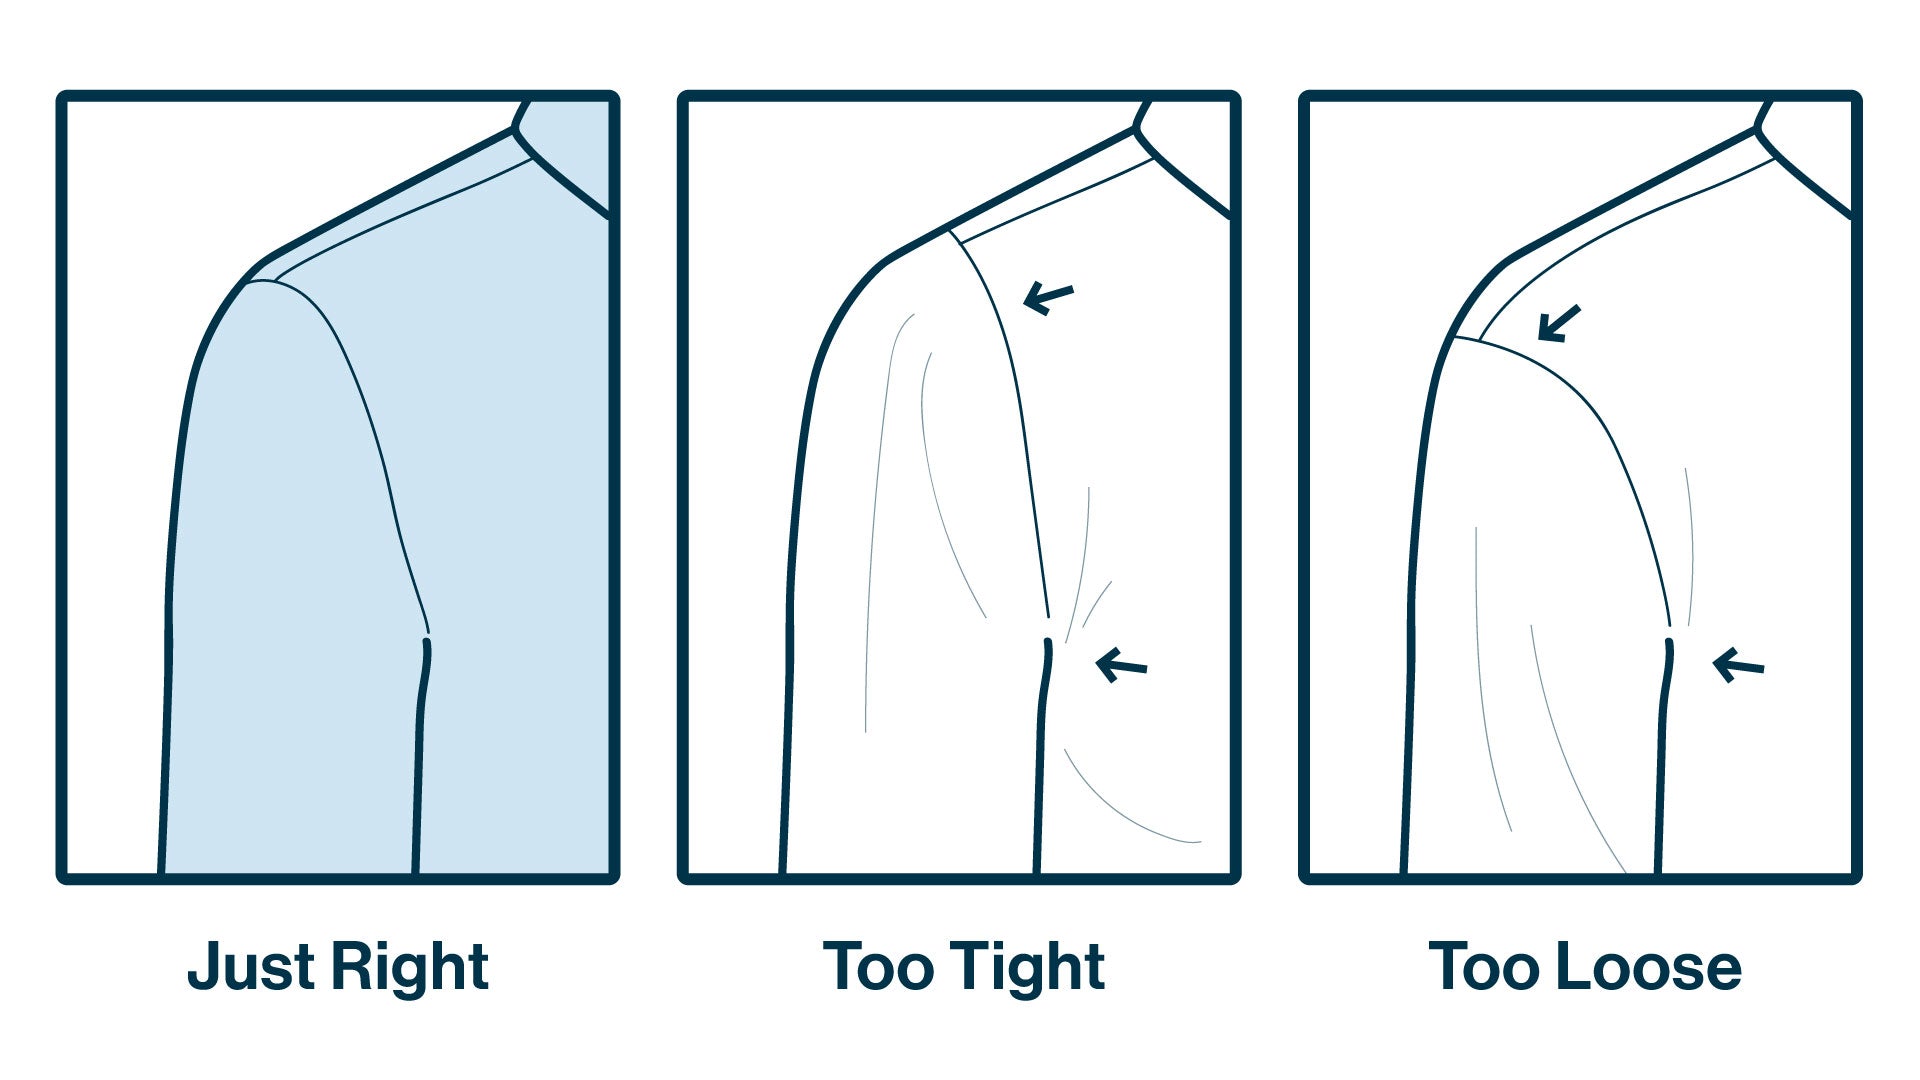 how should a dress shirt fit